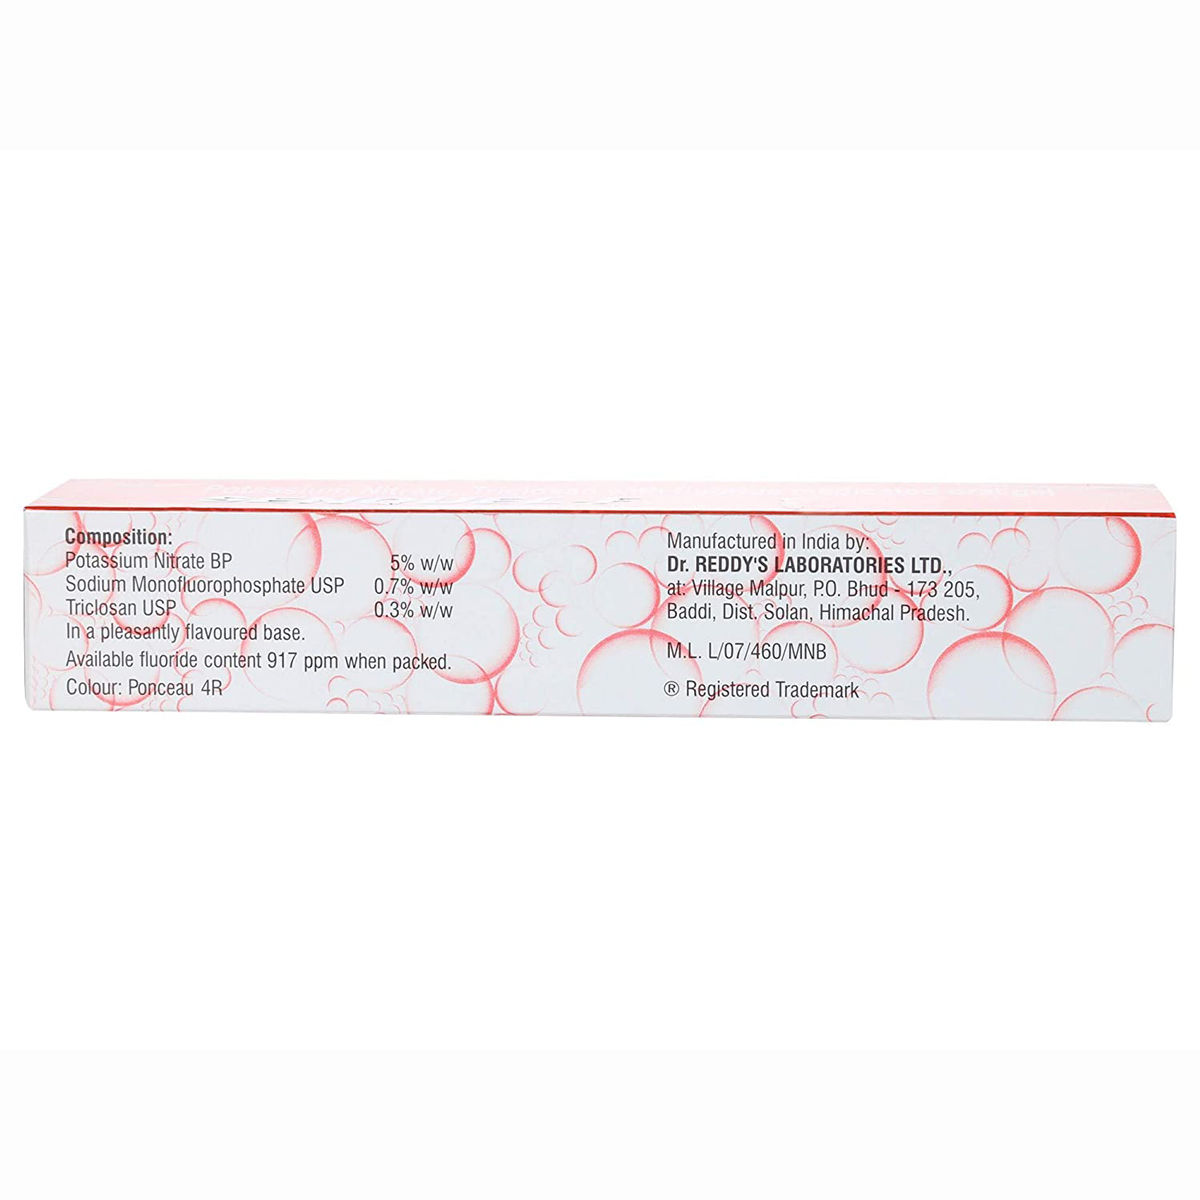 Senquel - F Foaming Medicated Oral Gel, 100 gm, Pack of 1 